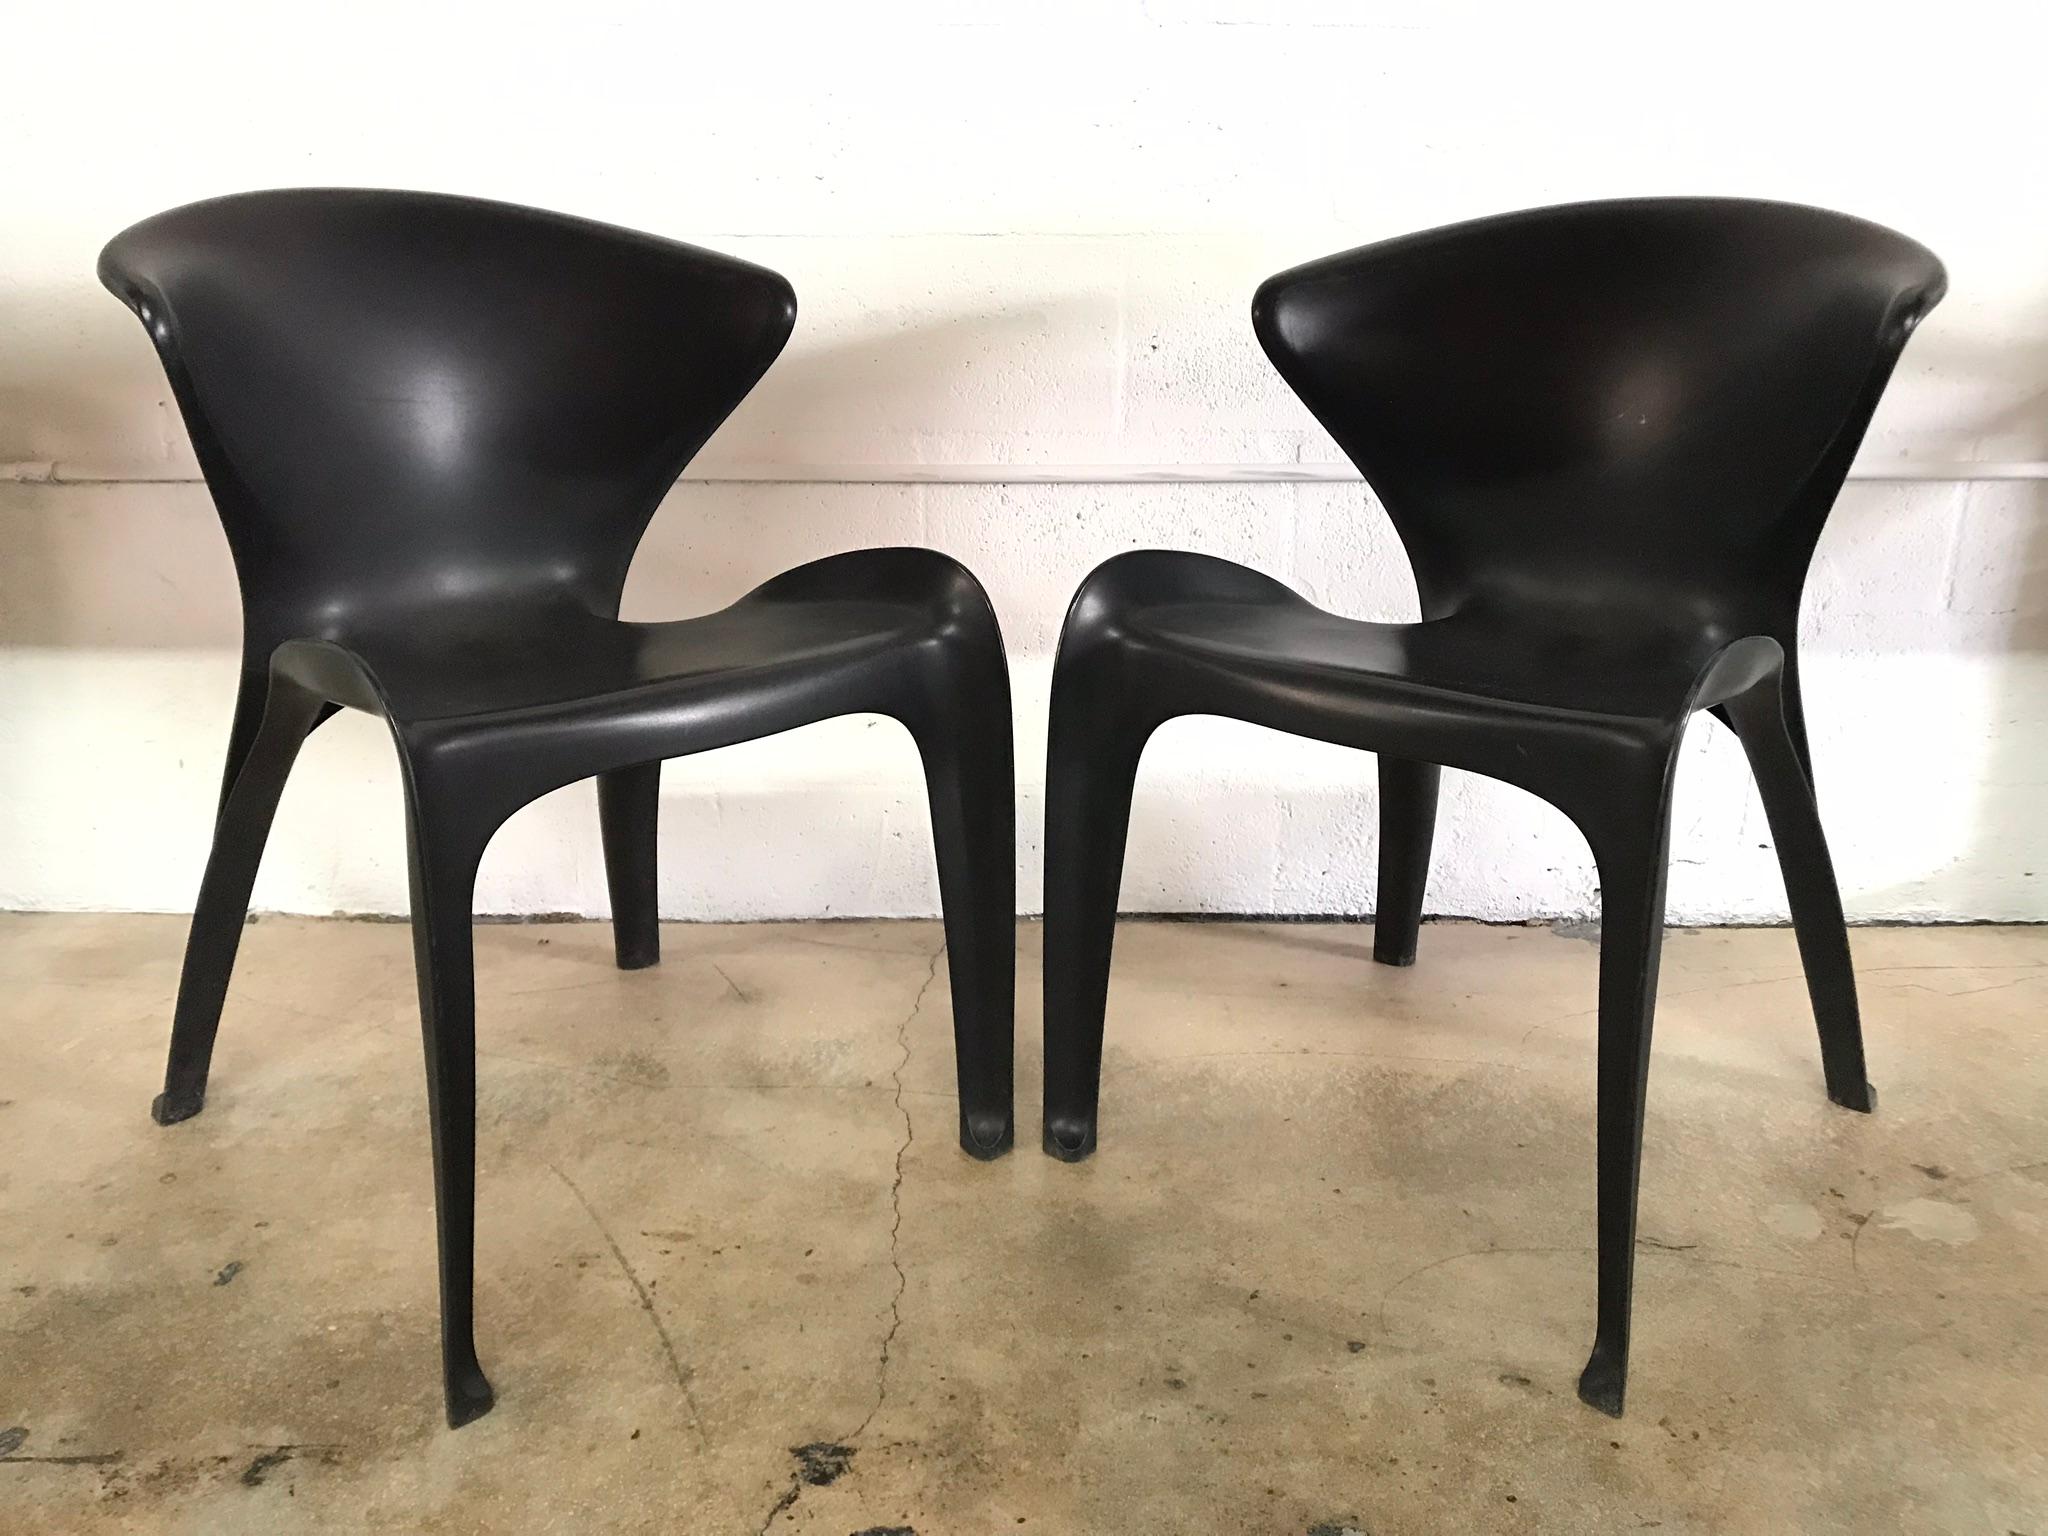 Organic Modern Pair of William Sawaya “Calla” Chairs in Matte Black for Heller, 2002